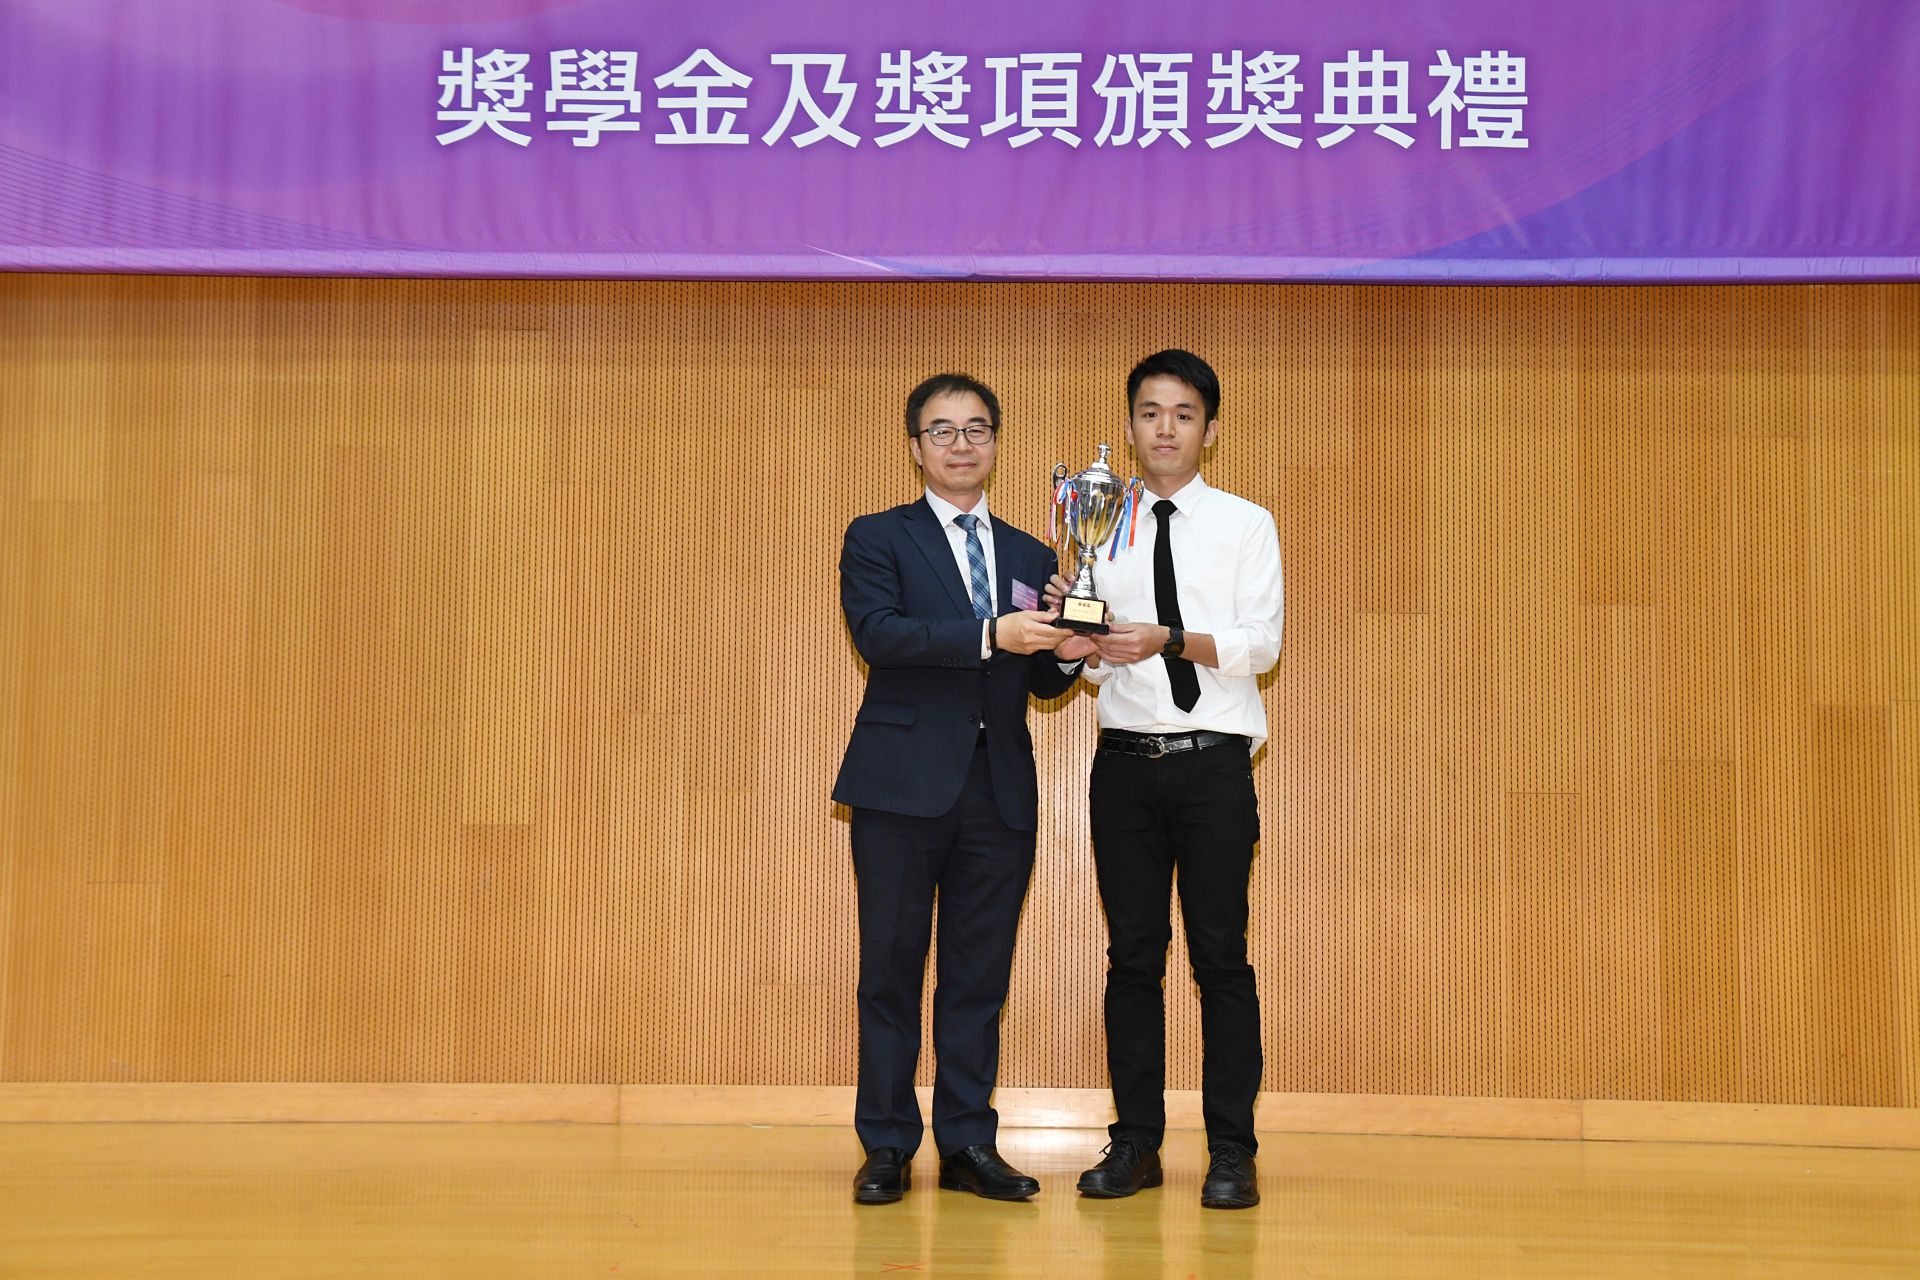 Scholarship and Award Presentation Ceremony 2018